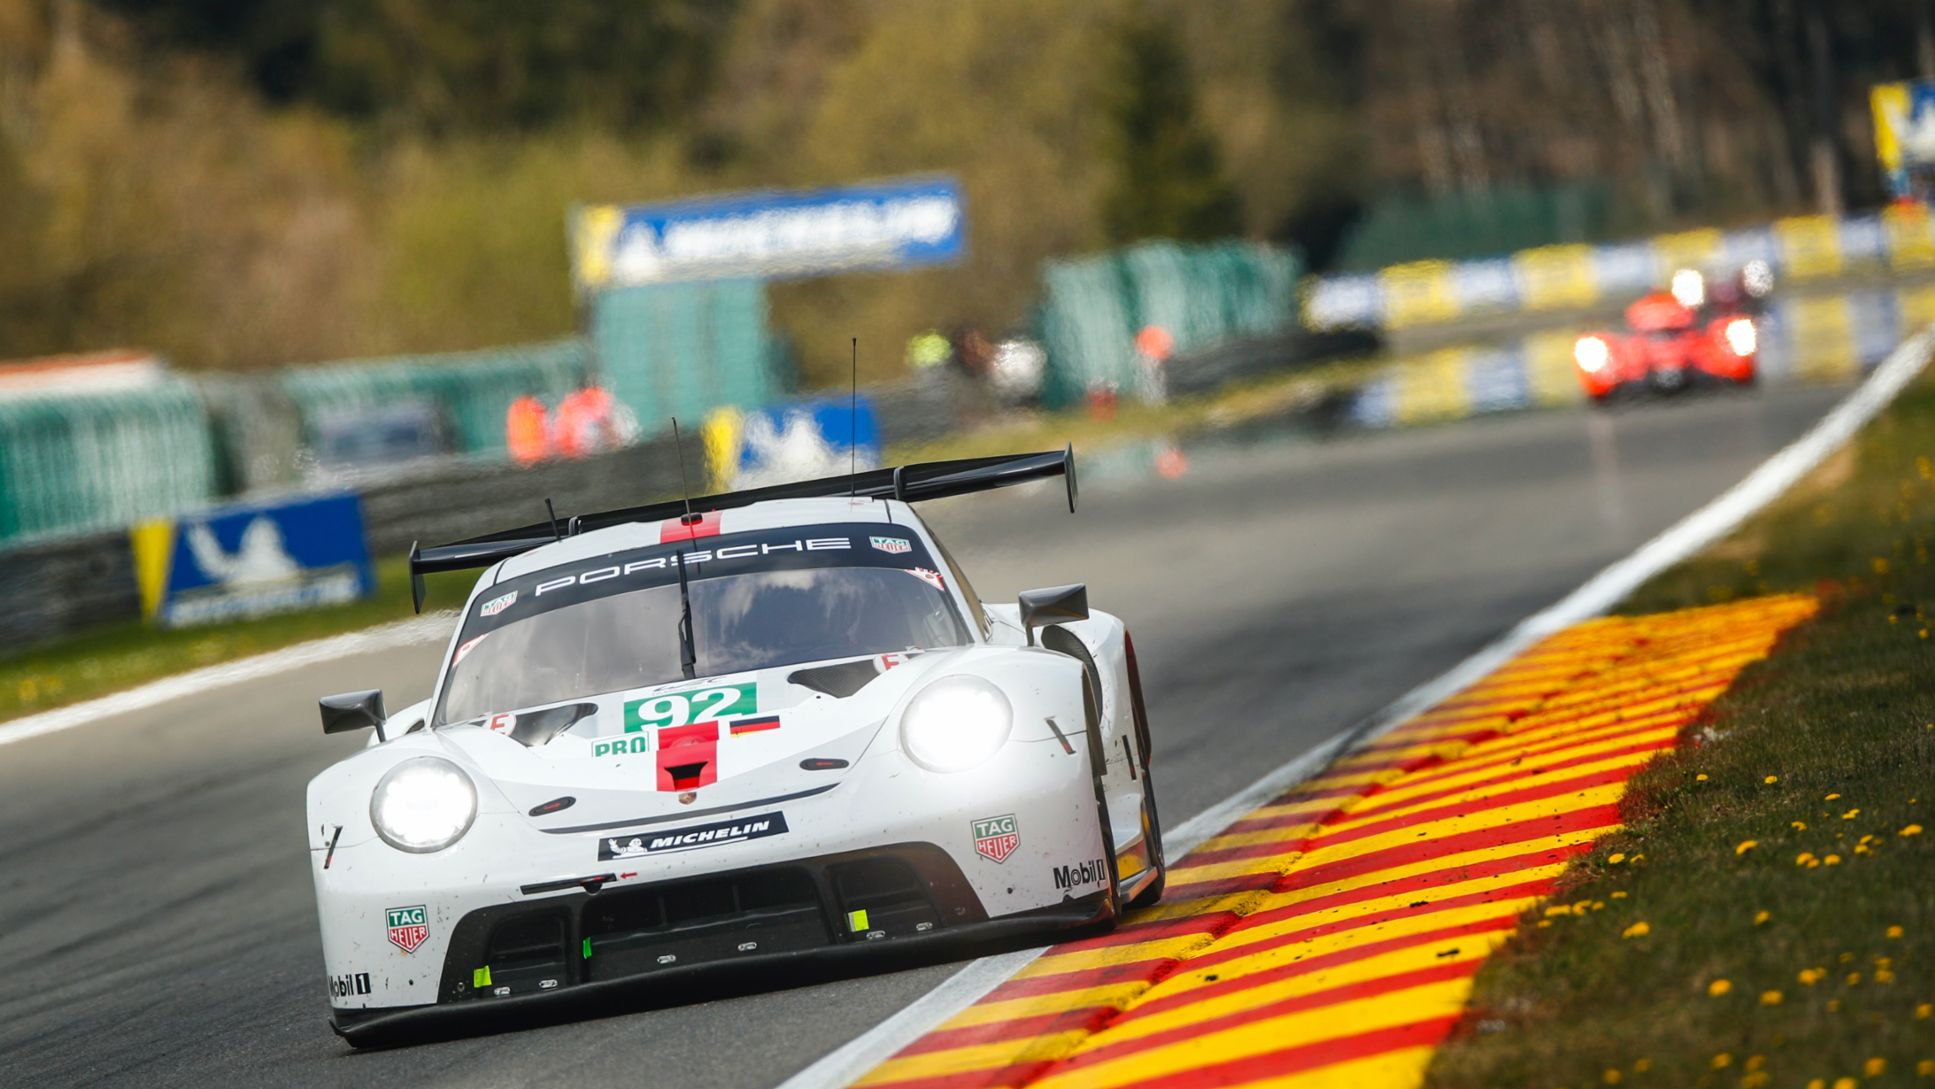 911 RSR, FIA World Endurance Championship, Spa-Francorchamps, 2021, Porsche AG